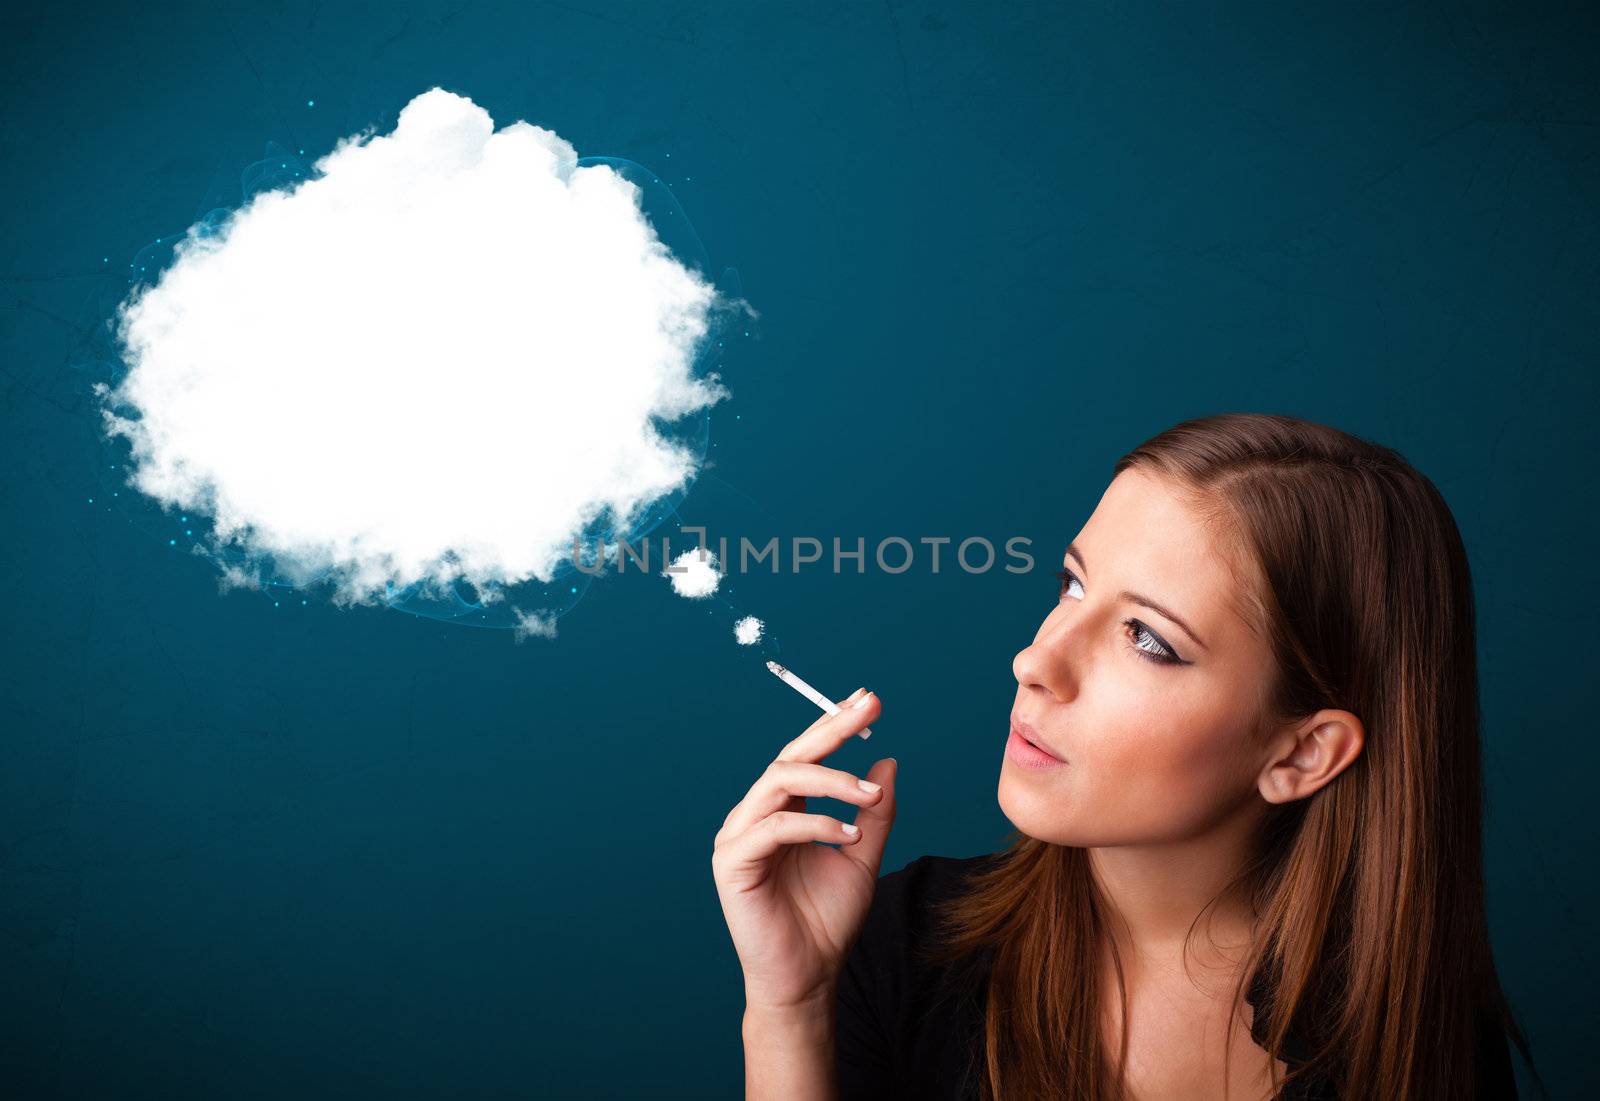 Pretty young woman smoking unhealthy cigarette with dense smoke